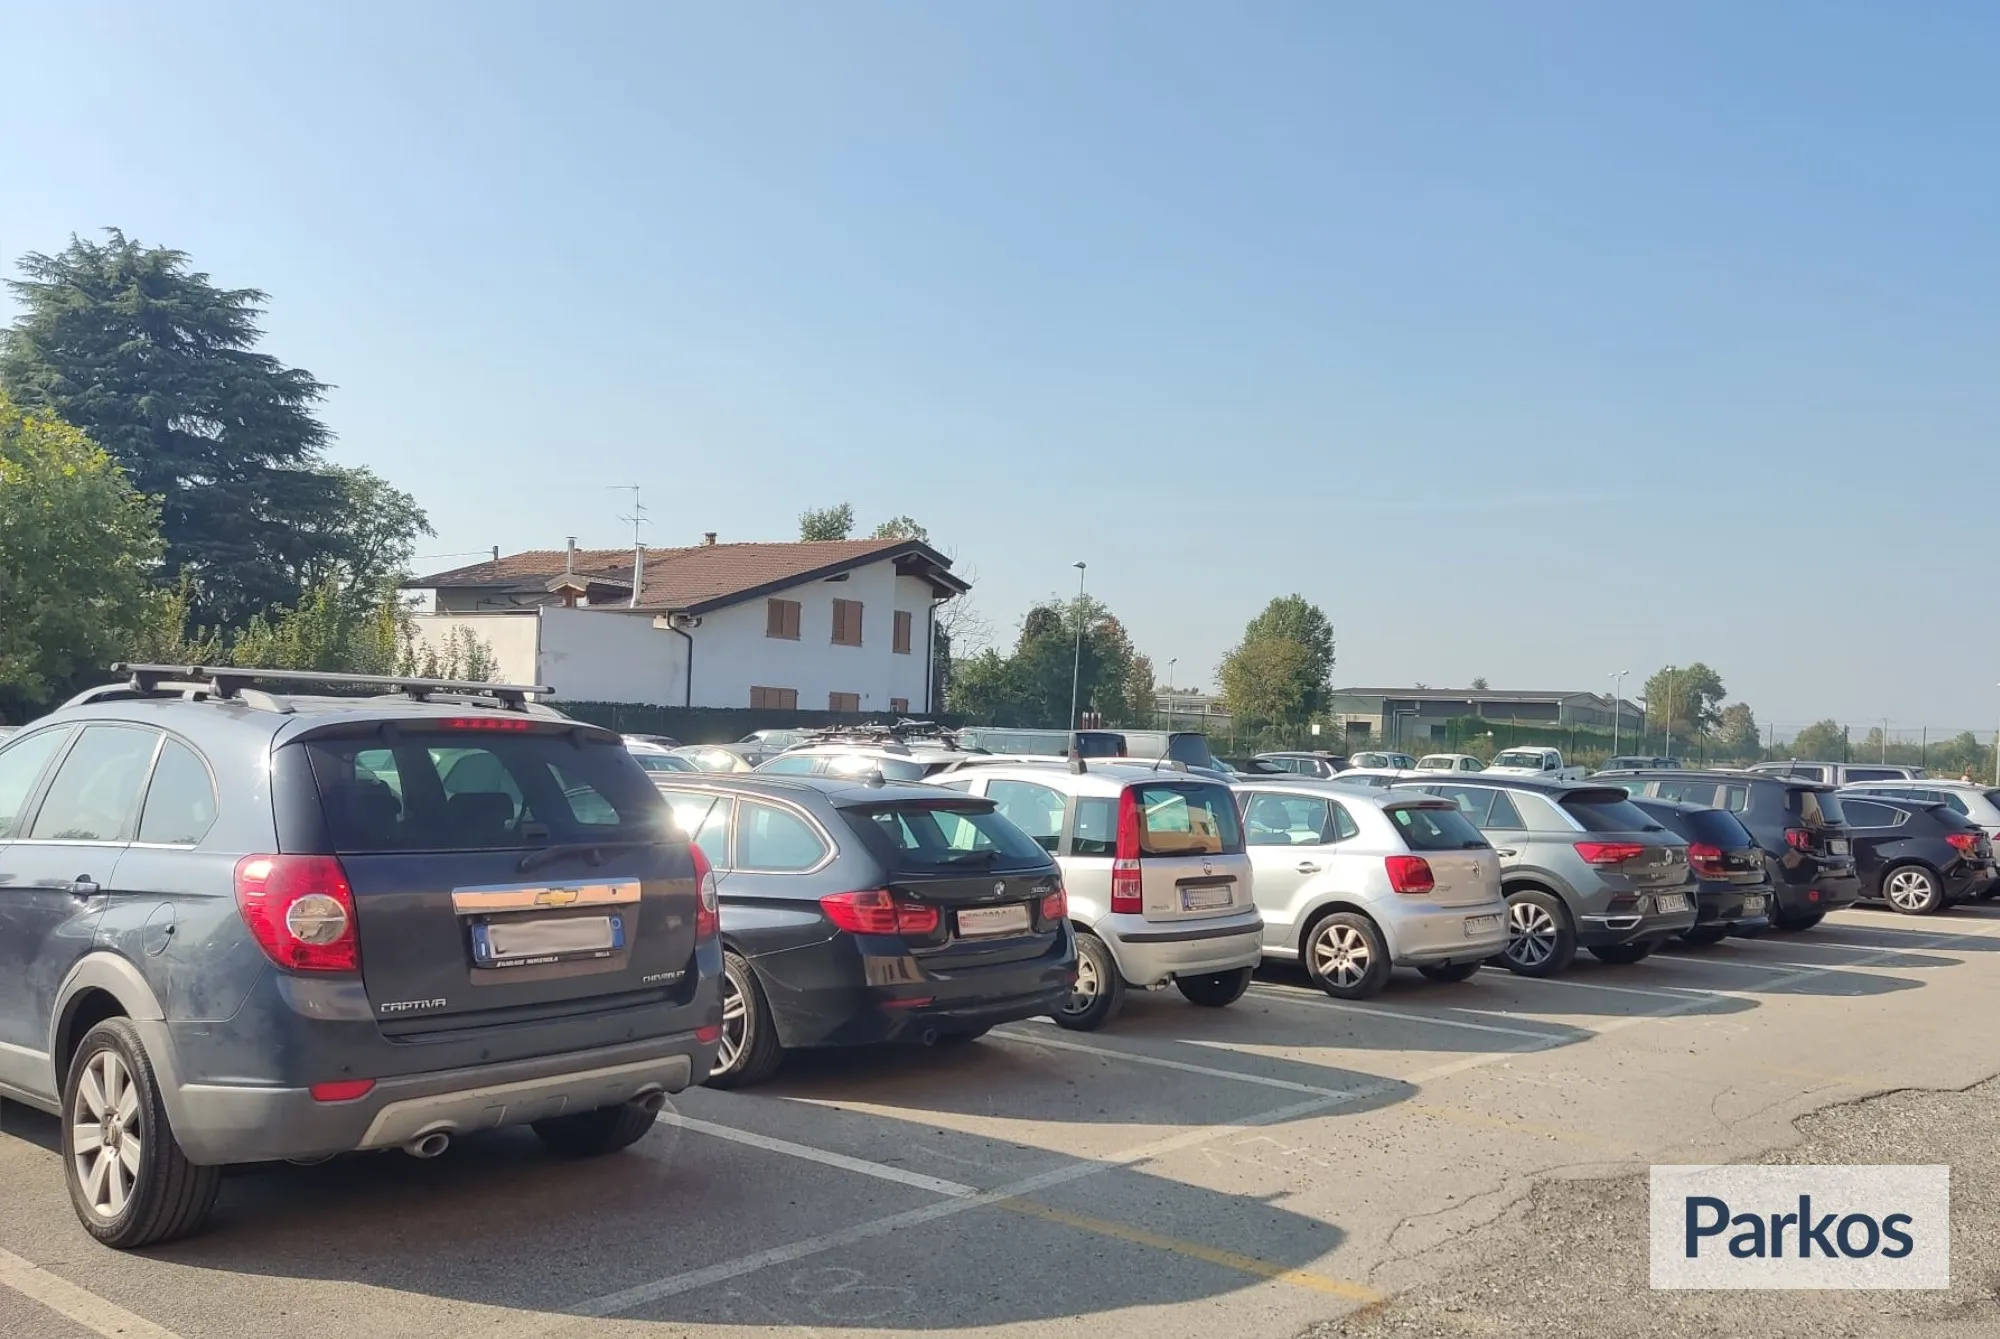 King Parking Orio (Paga online) - Bergamo Orio al Serio Parking - picture 1